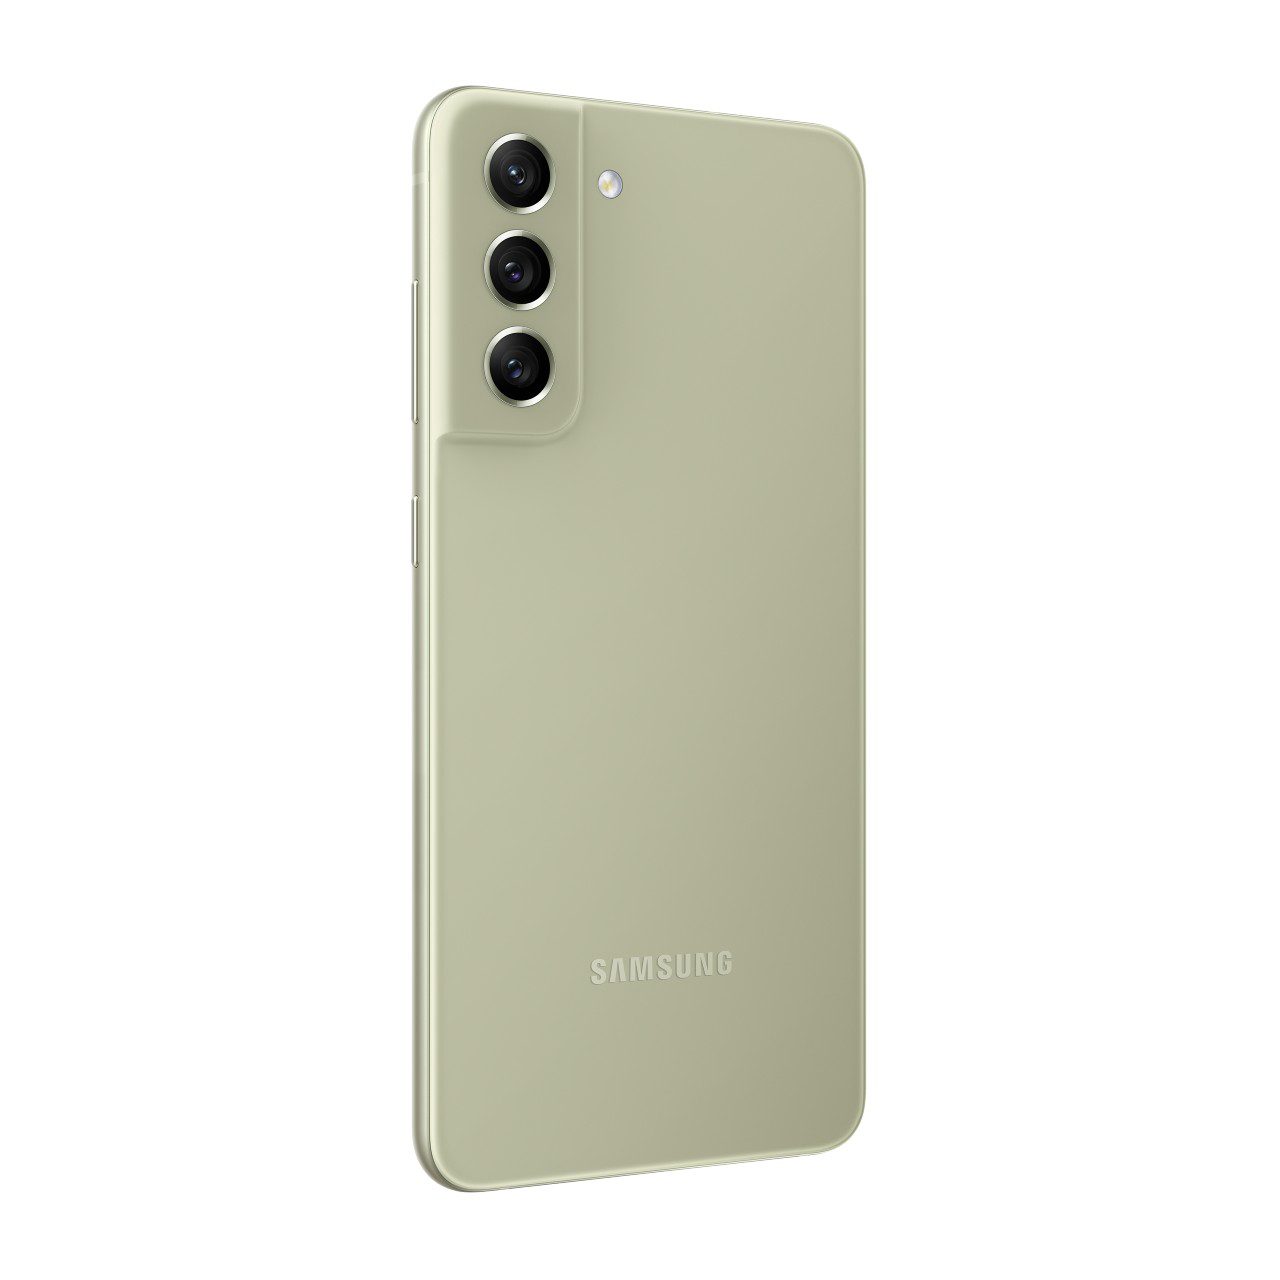 Samsung Galaxy S21 FE 5G Dual SIM 128GB And 8GB RAM Mobile Phone